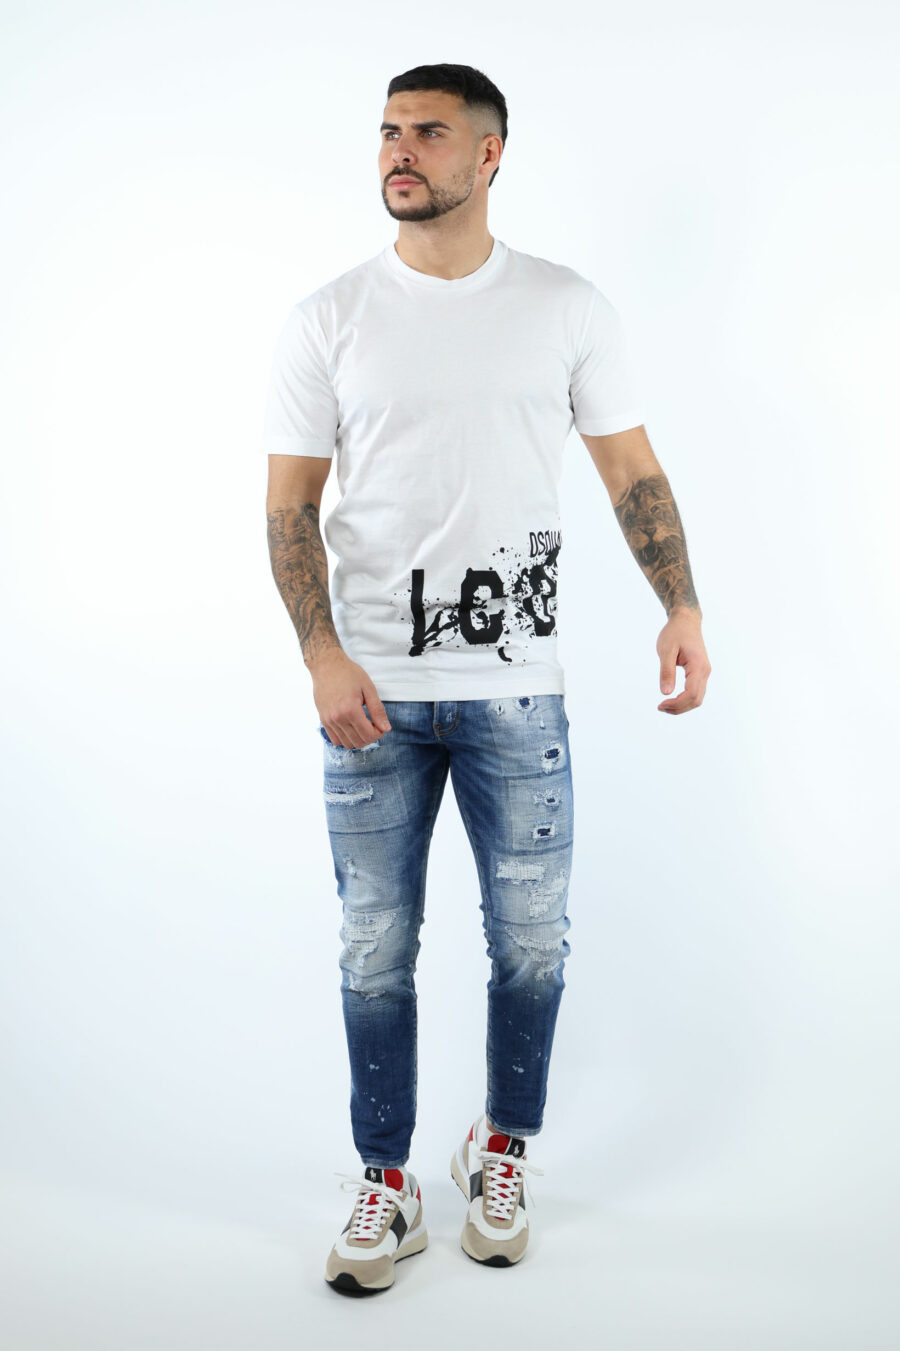 White t-shirt with "icon splash" maxilogo underneath - 106669